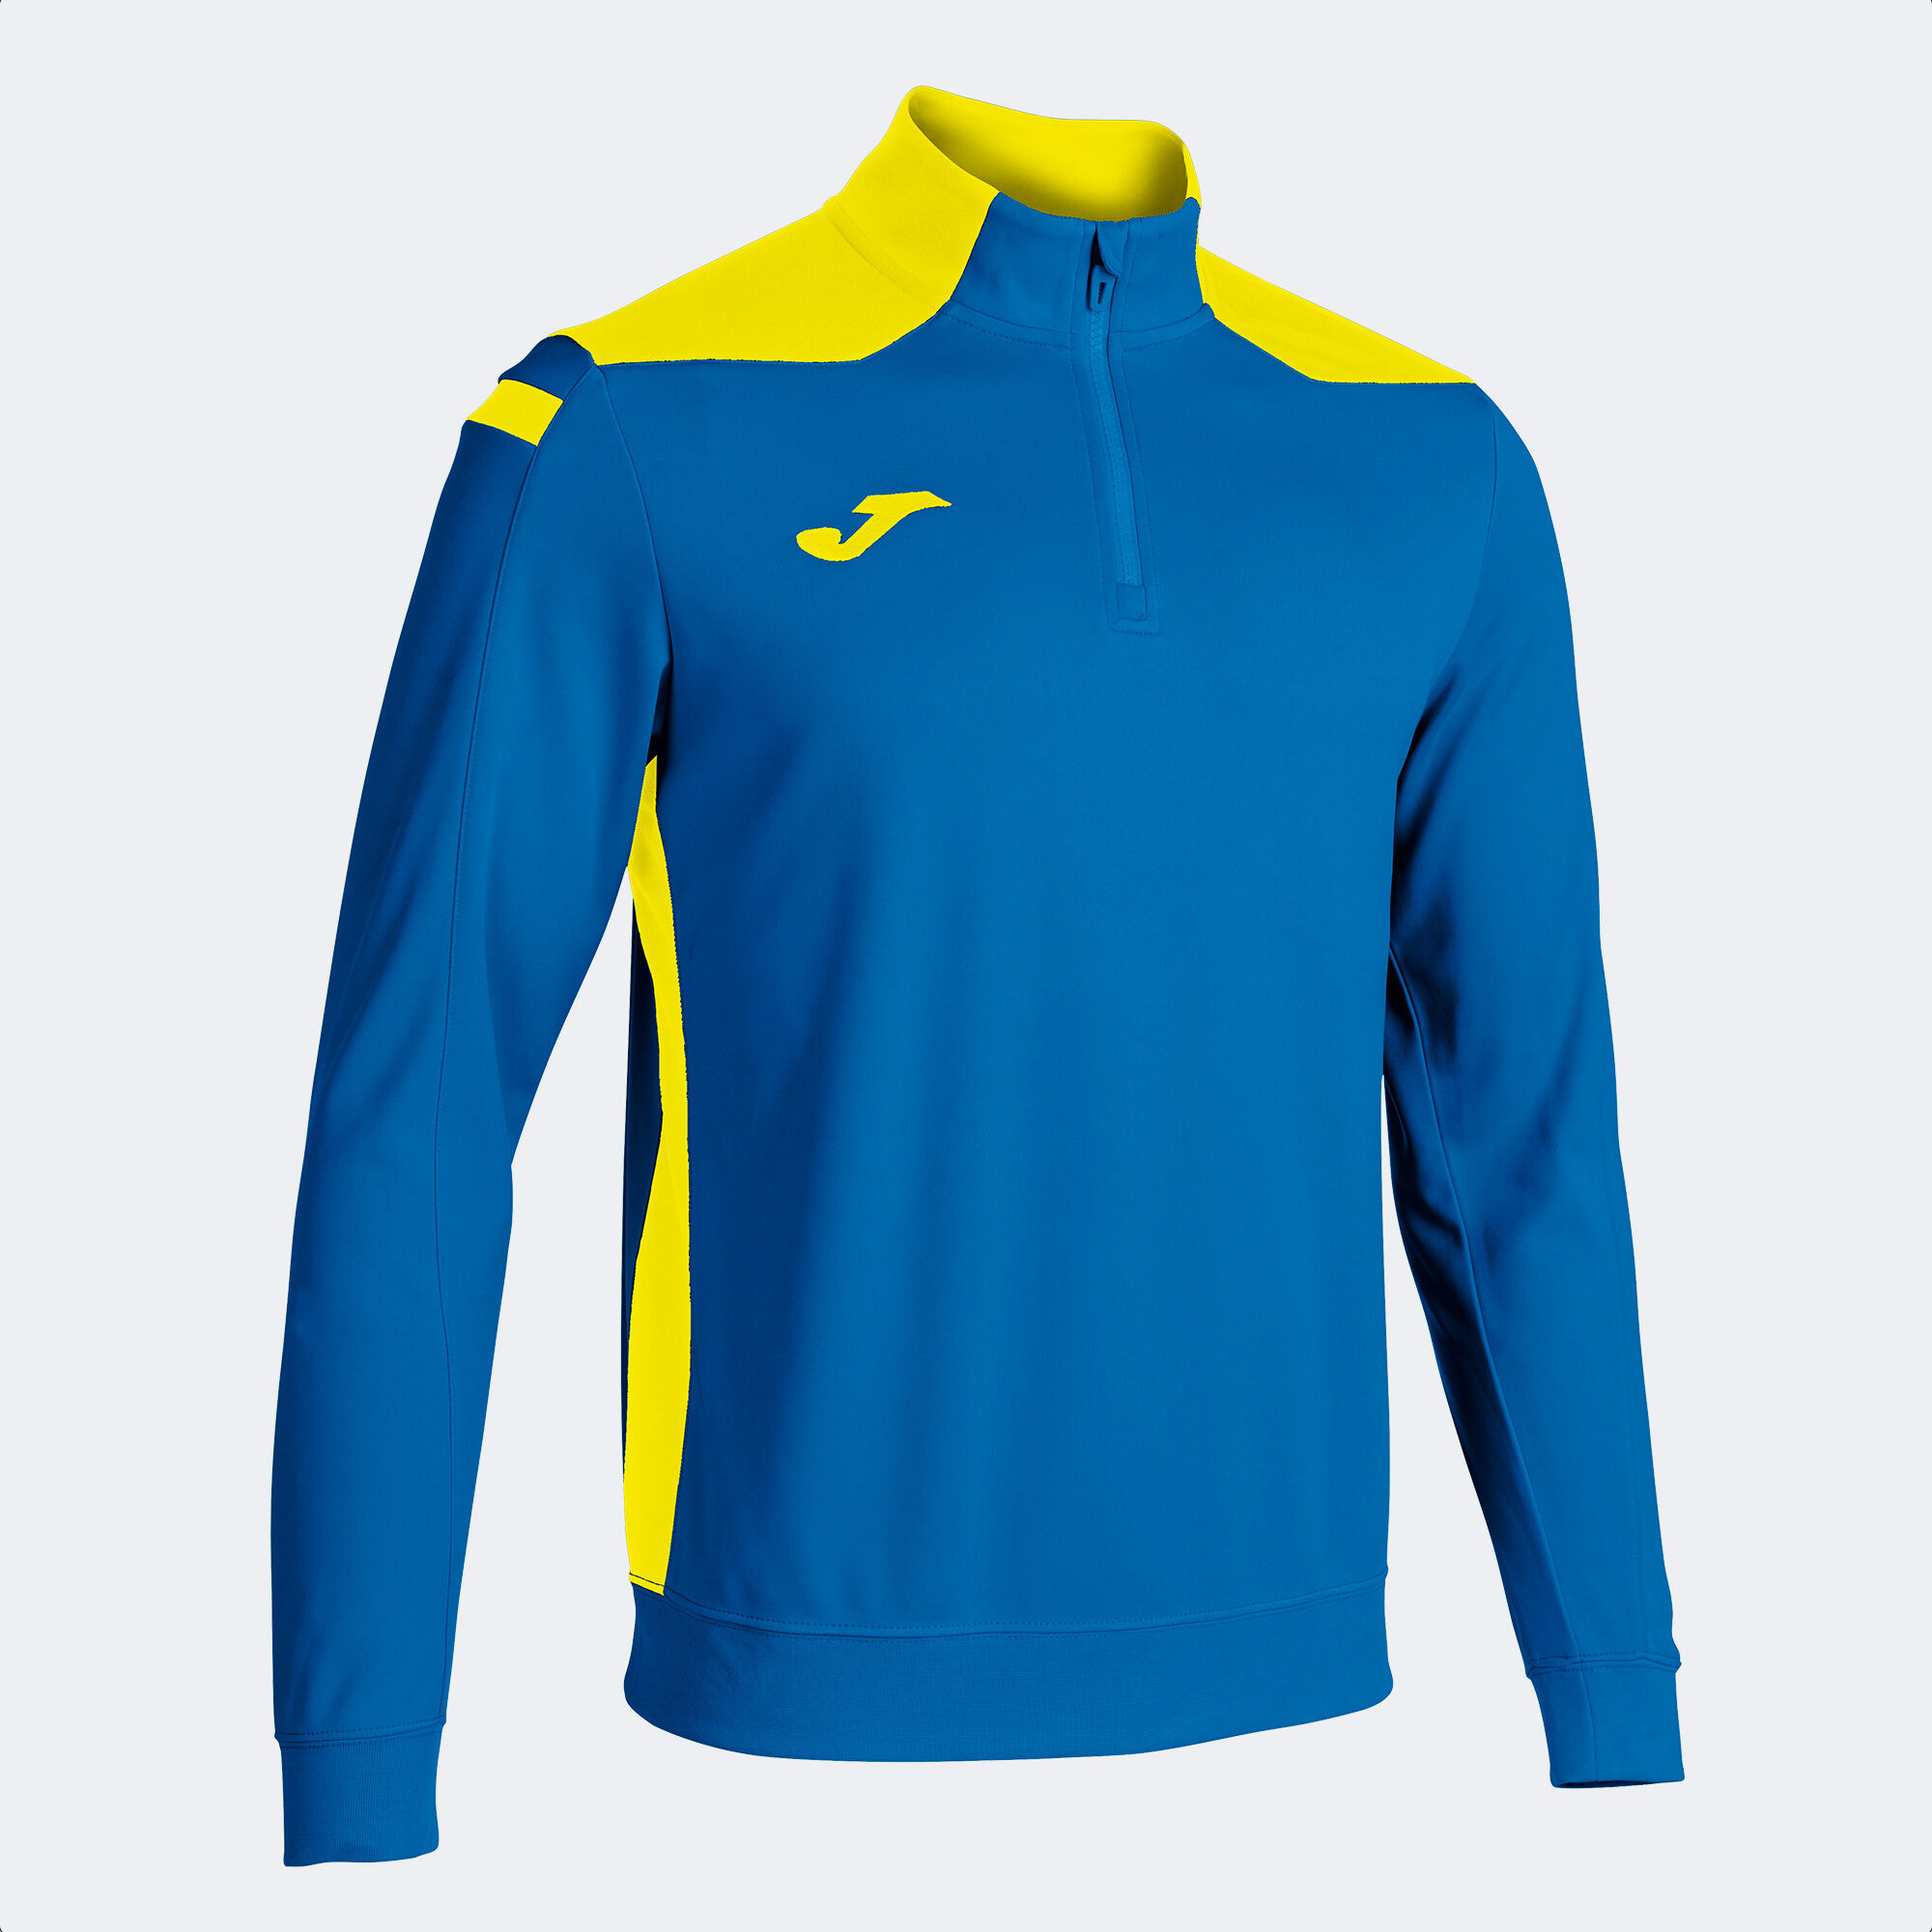 Sweat-shirt homme Championship VI bleu roi jaune